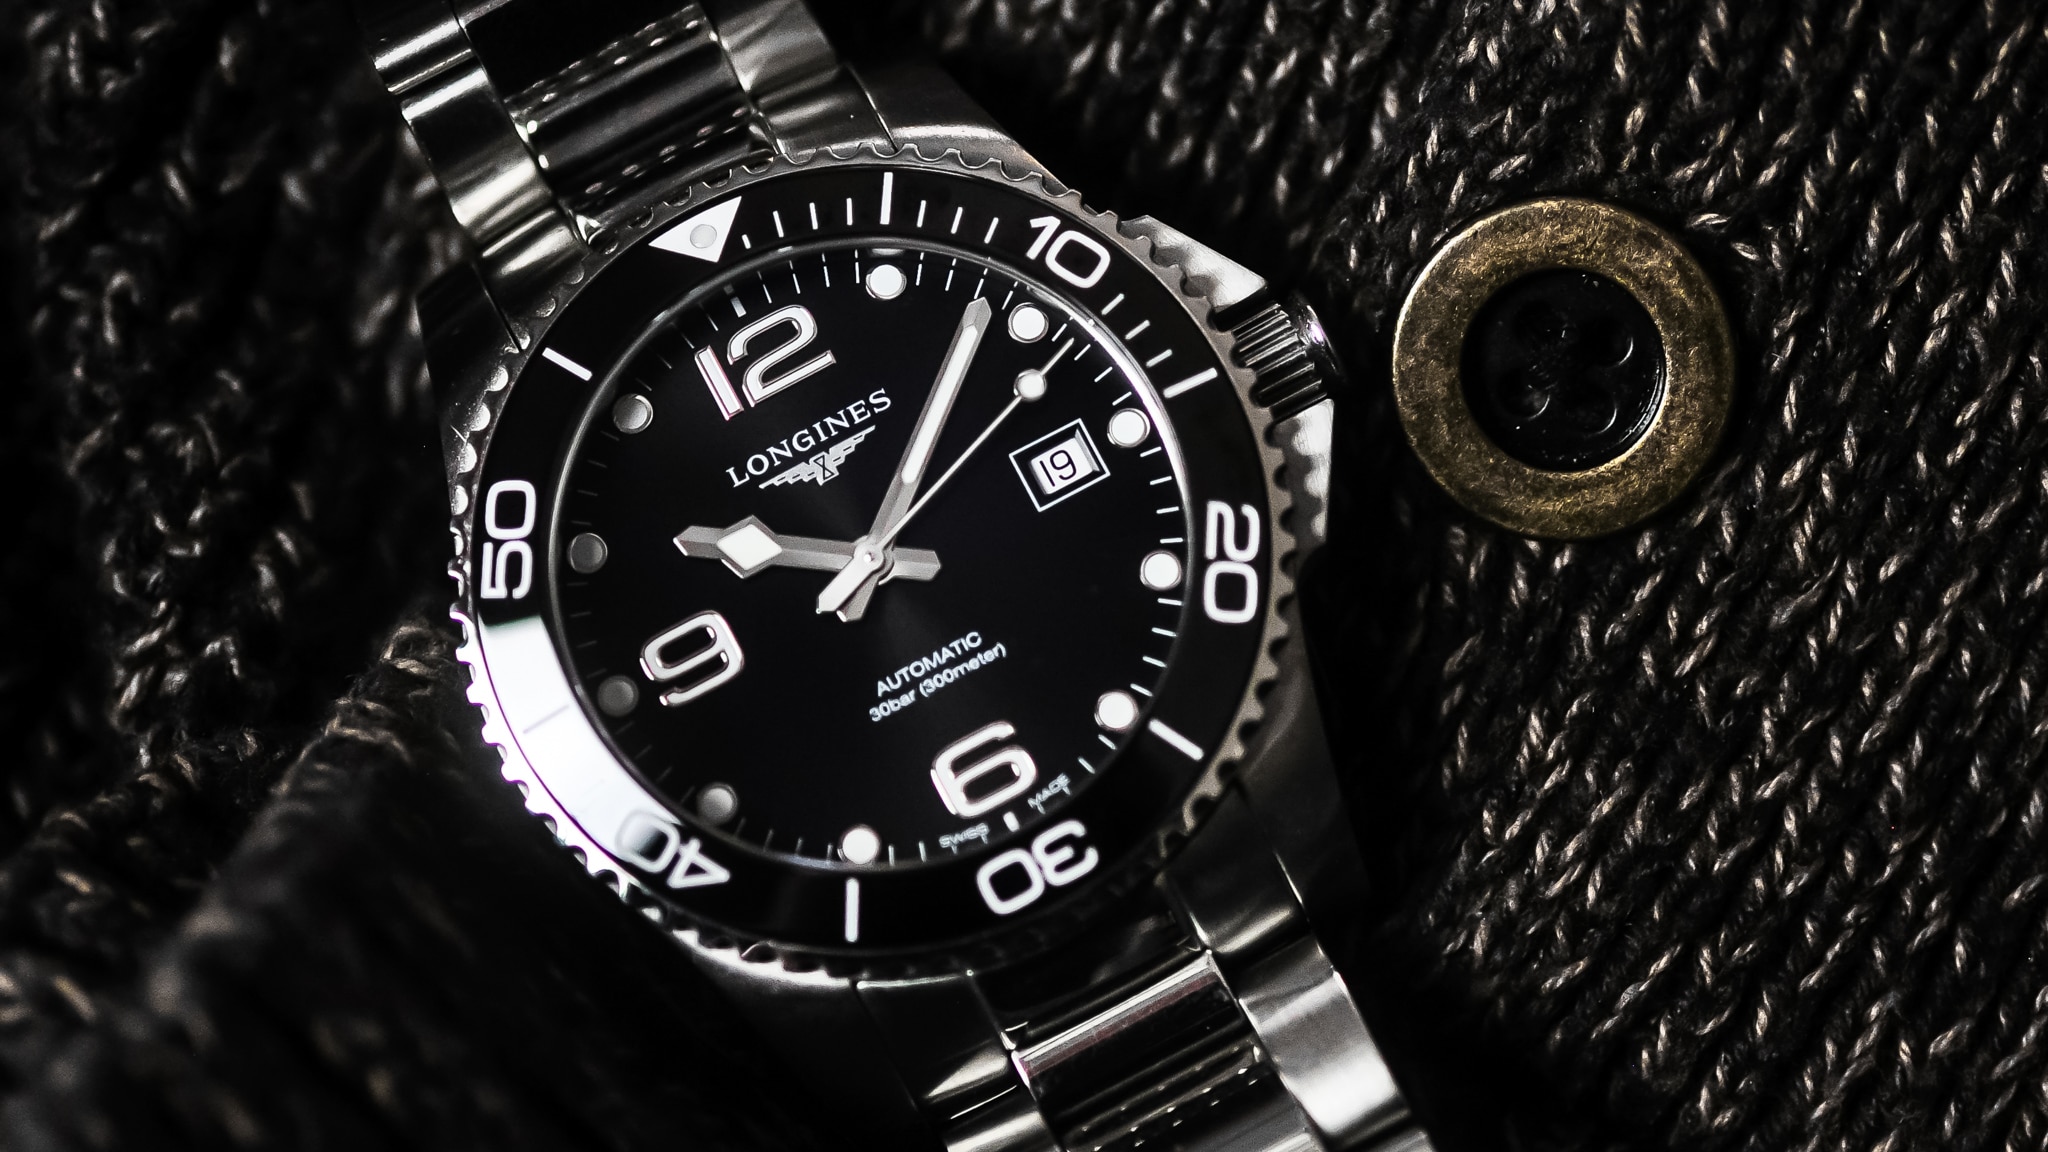 Longines Hydroconquest Automatic 43mm Watch